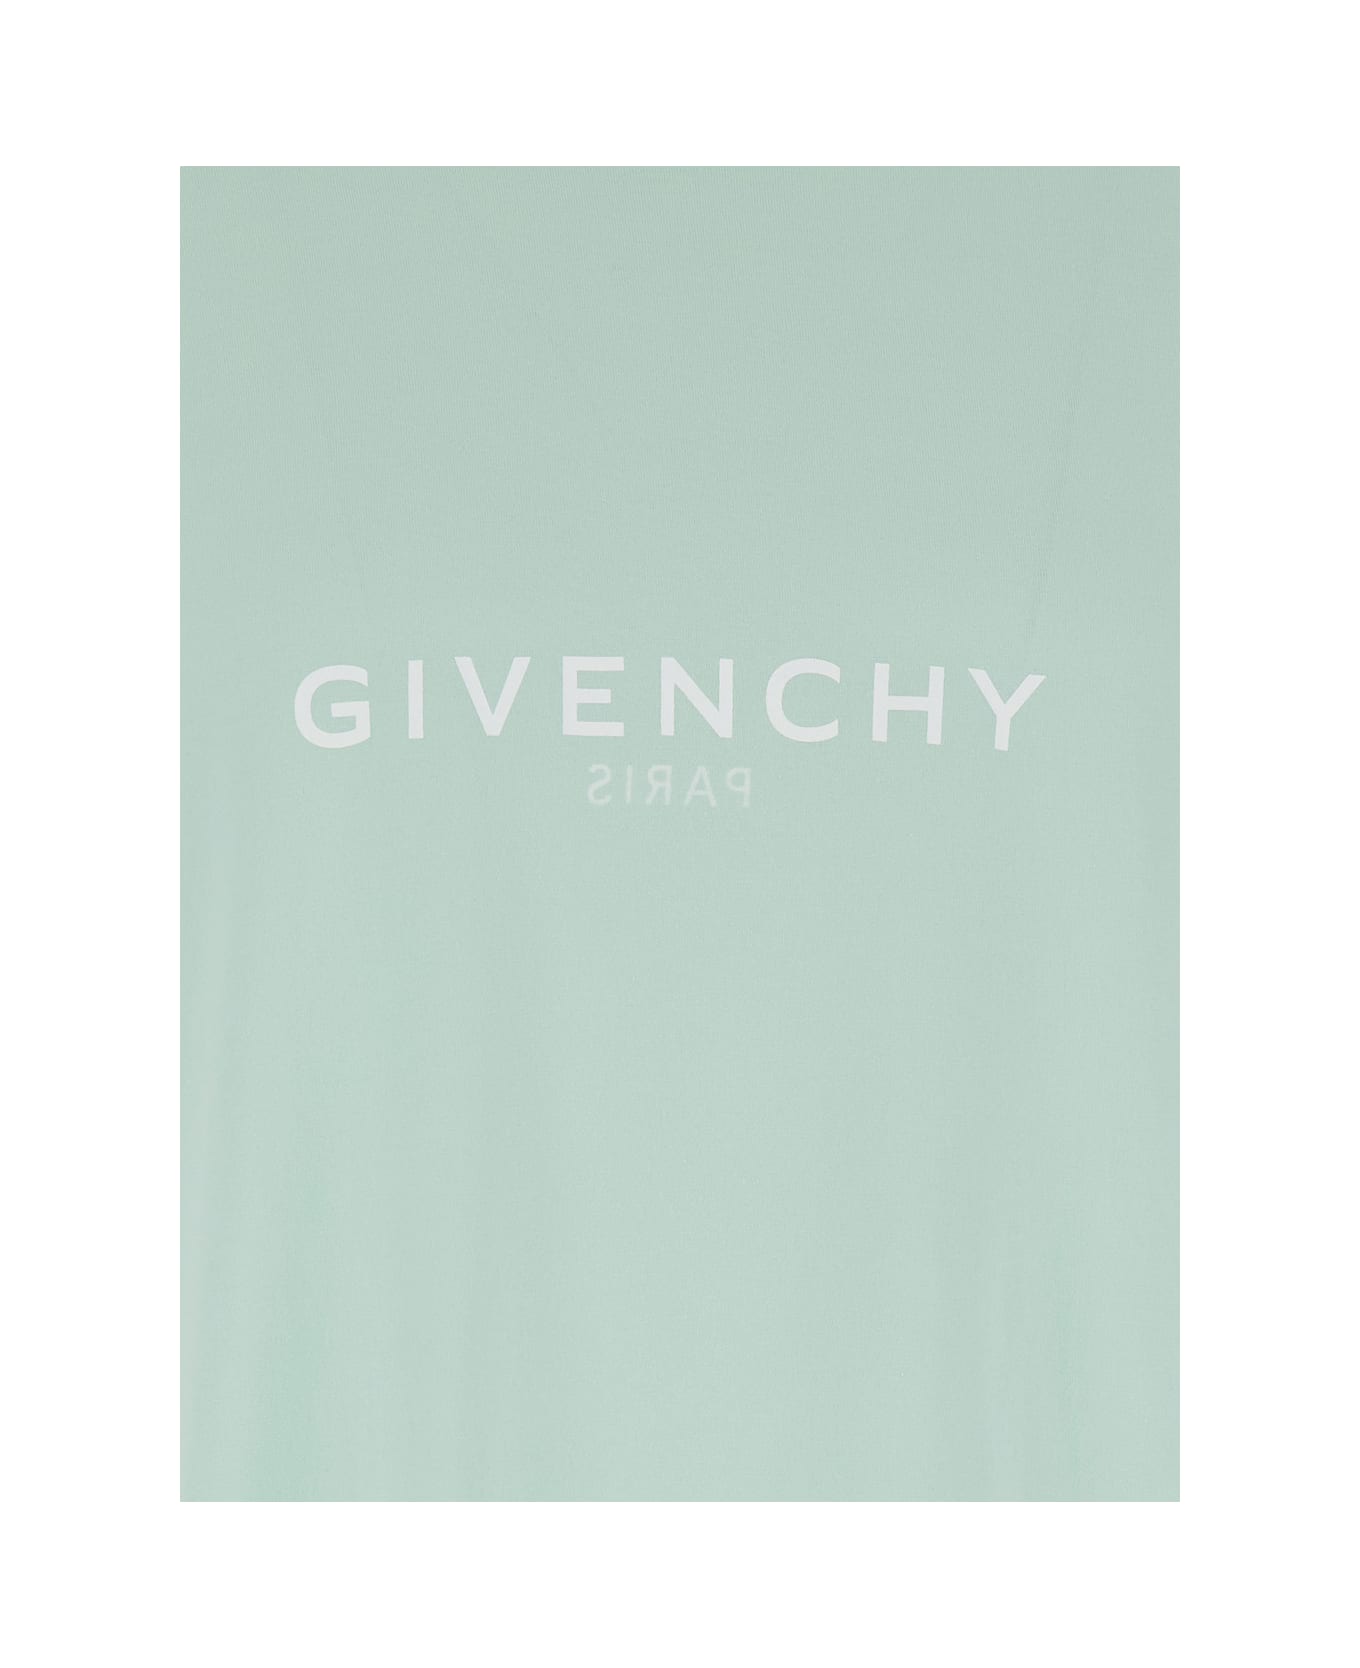 Givenchy T-shirt With Logo - AQUA GREEN シャツ